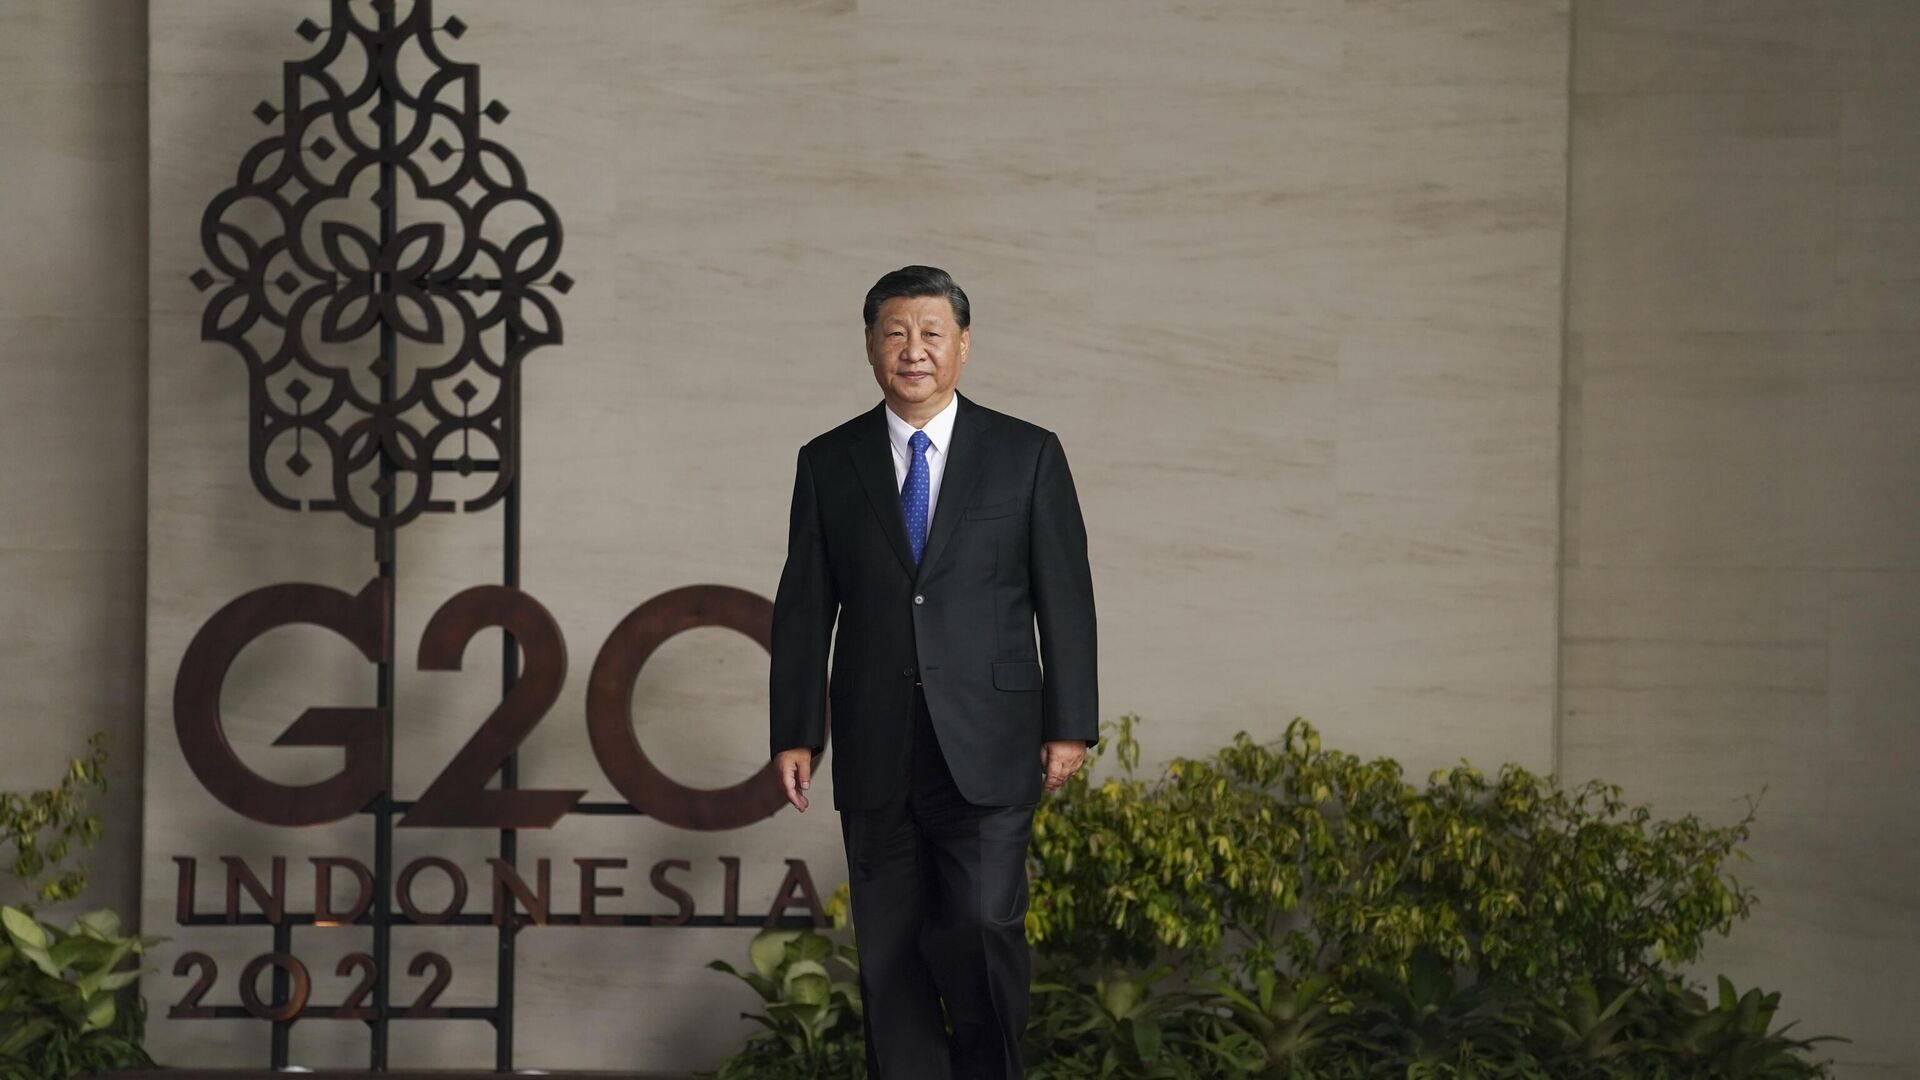 Китайский лидер Си Цзиньпин прибывает к началу саммита G20 в Бали, Индонезия - Sputnik Латвия, 1920, 25.11.2022